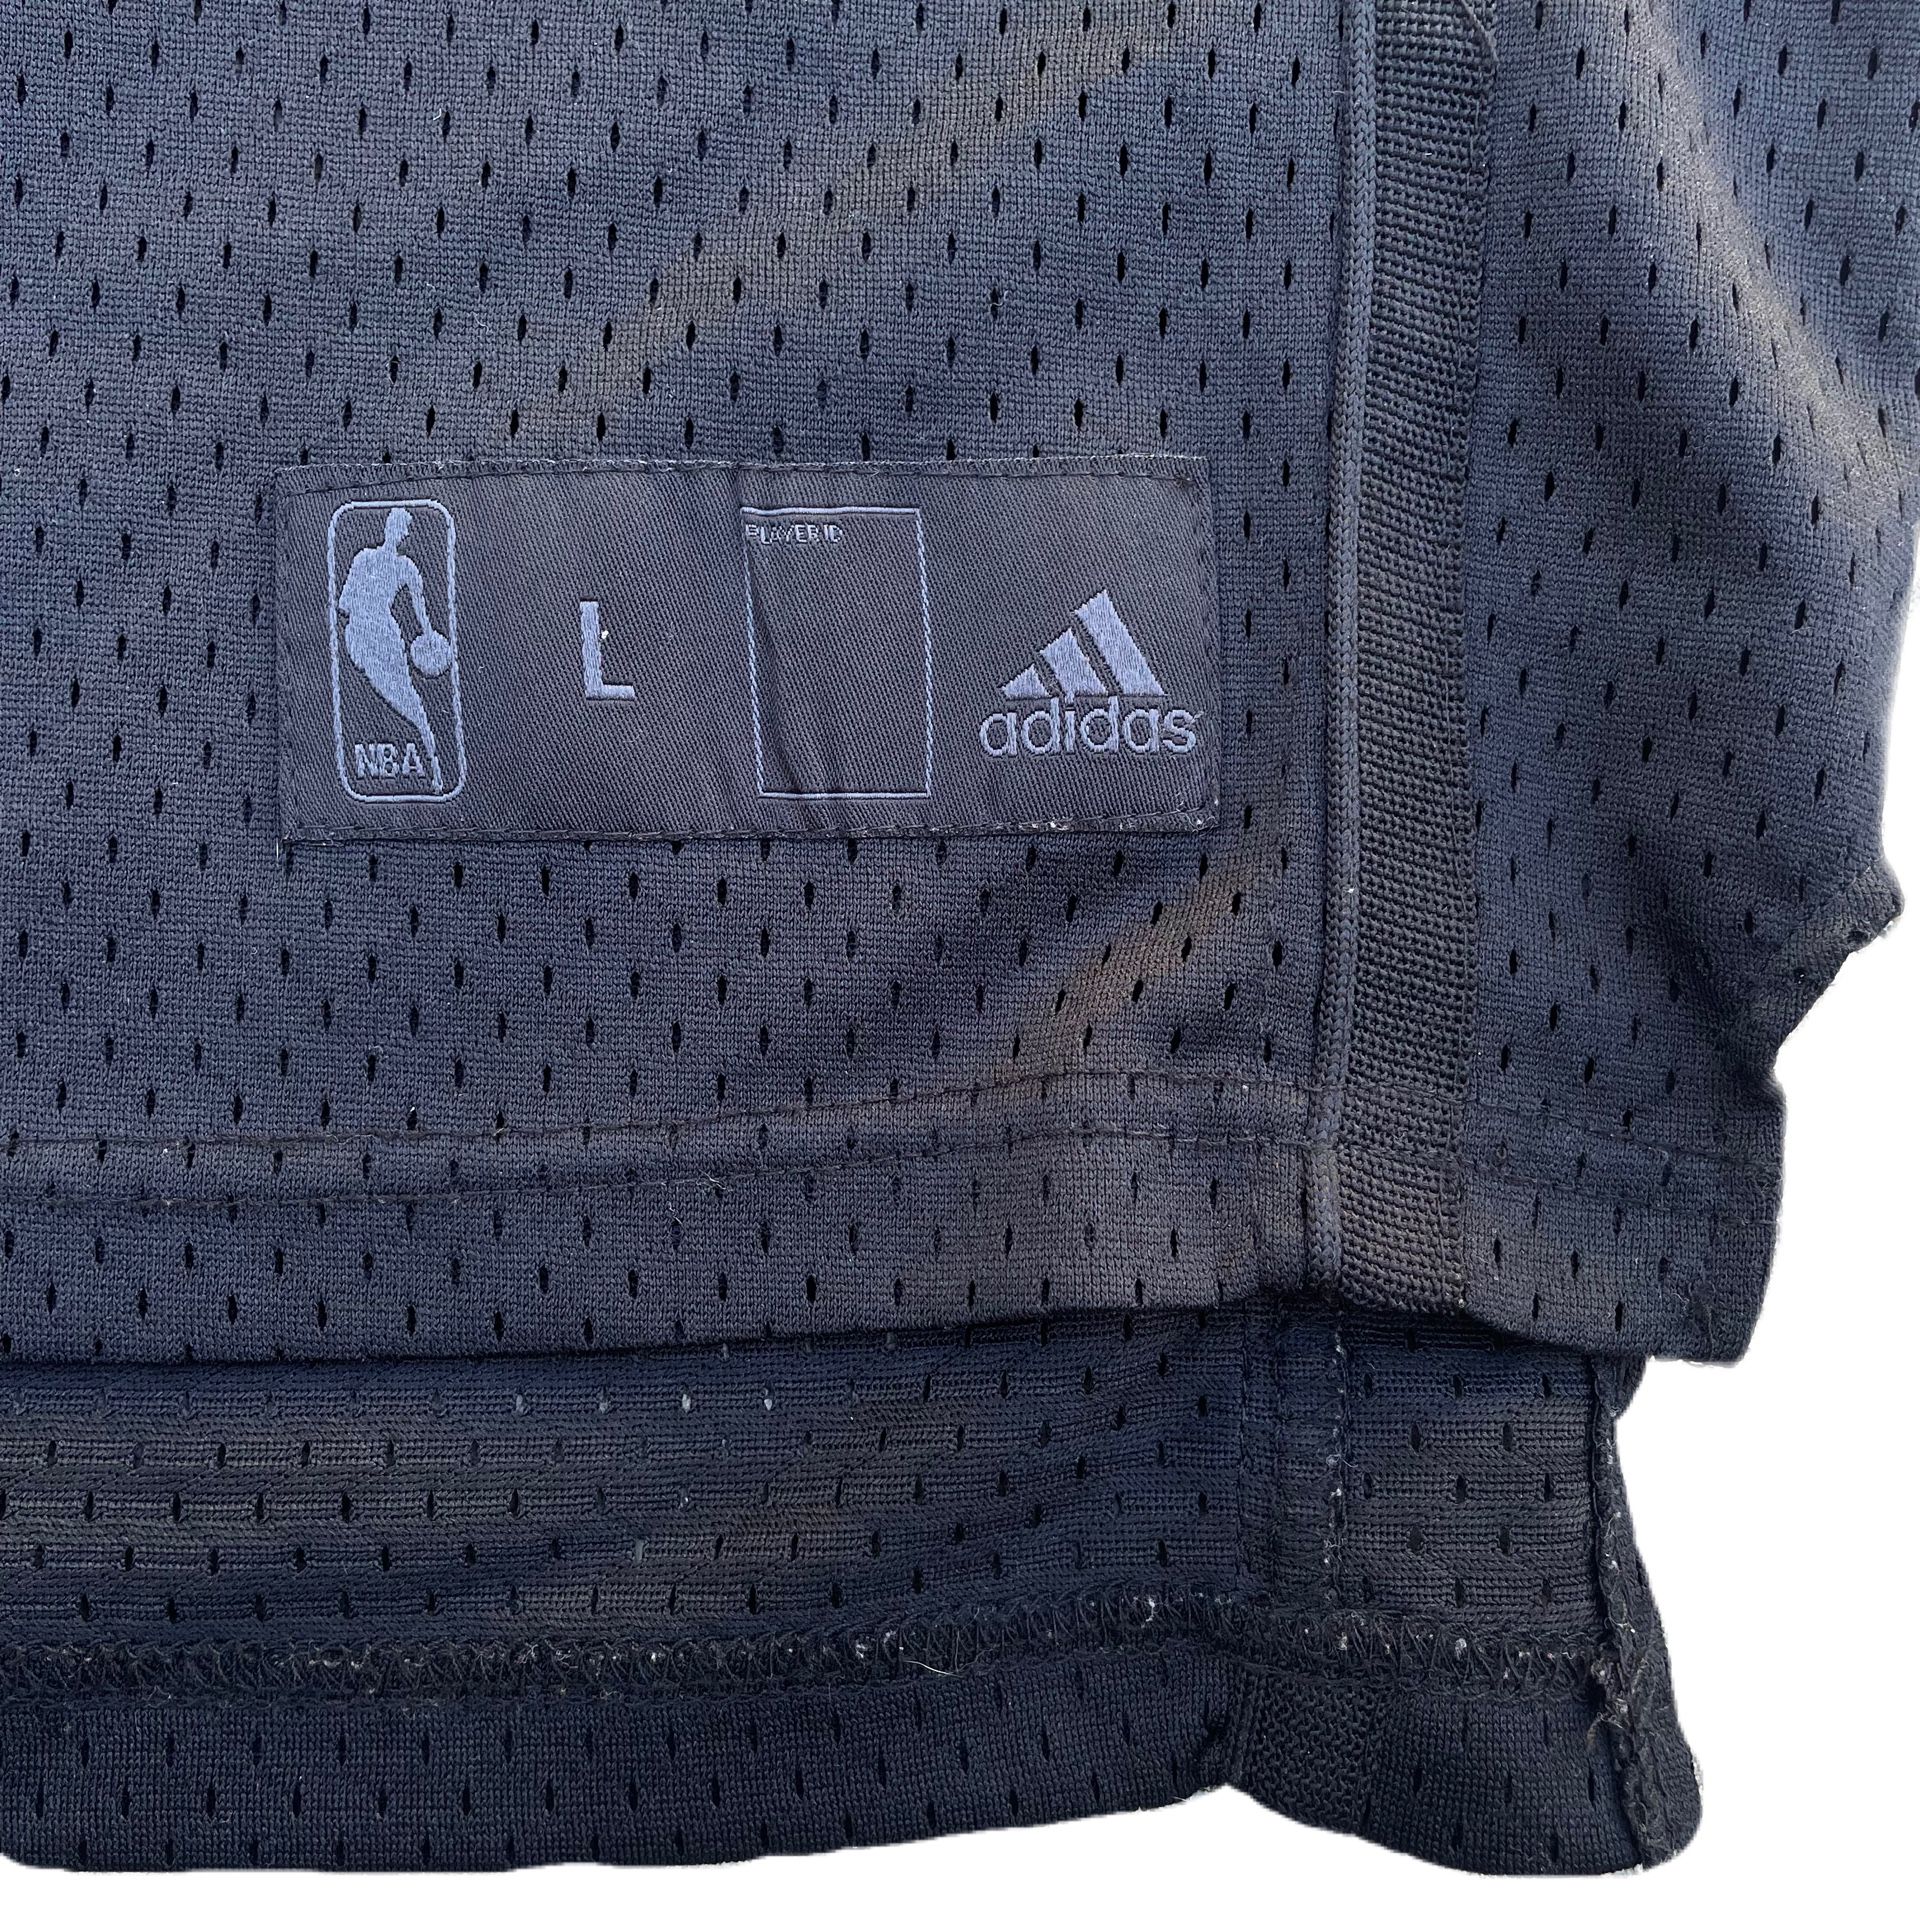 Kobe Bryant Adidas Jersey for Sale in San Bernardino, CA - OfferUp